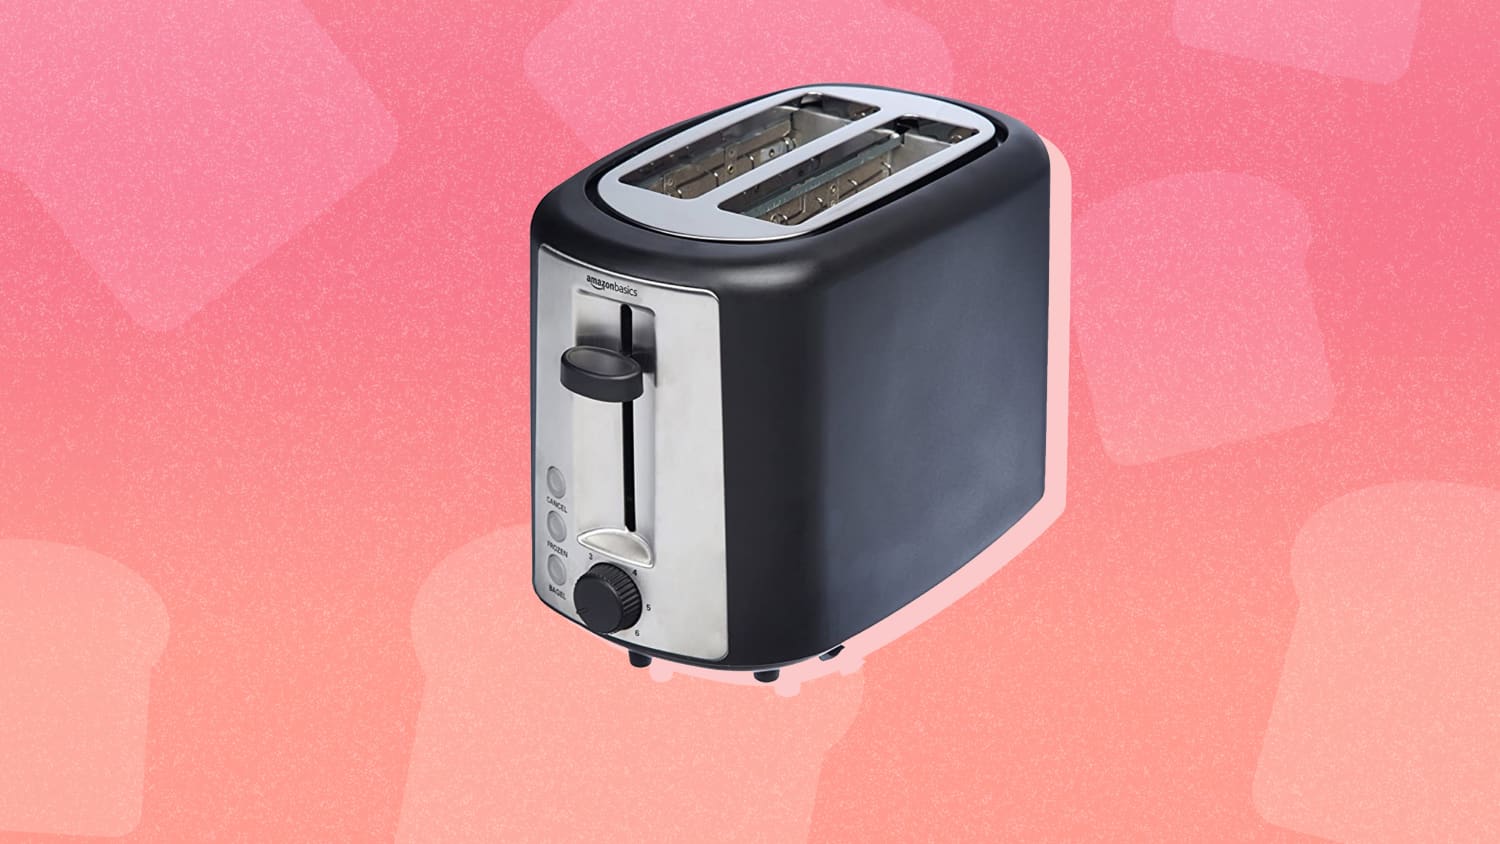 https://cdn.apartmenttherapy.info/image/upload/f_jpg,q_auto:eco,c_fill,g_auto,w_1500,ar_16:9/k%2FDesign%2F2020-12%2Famazonbasics-2slice-toaster